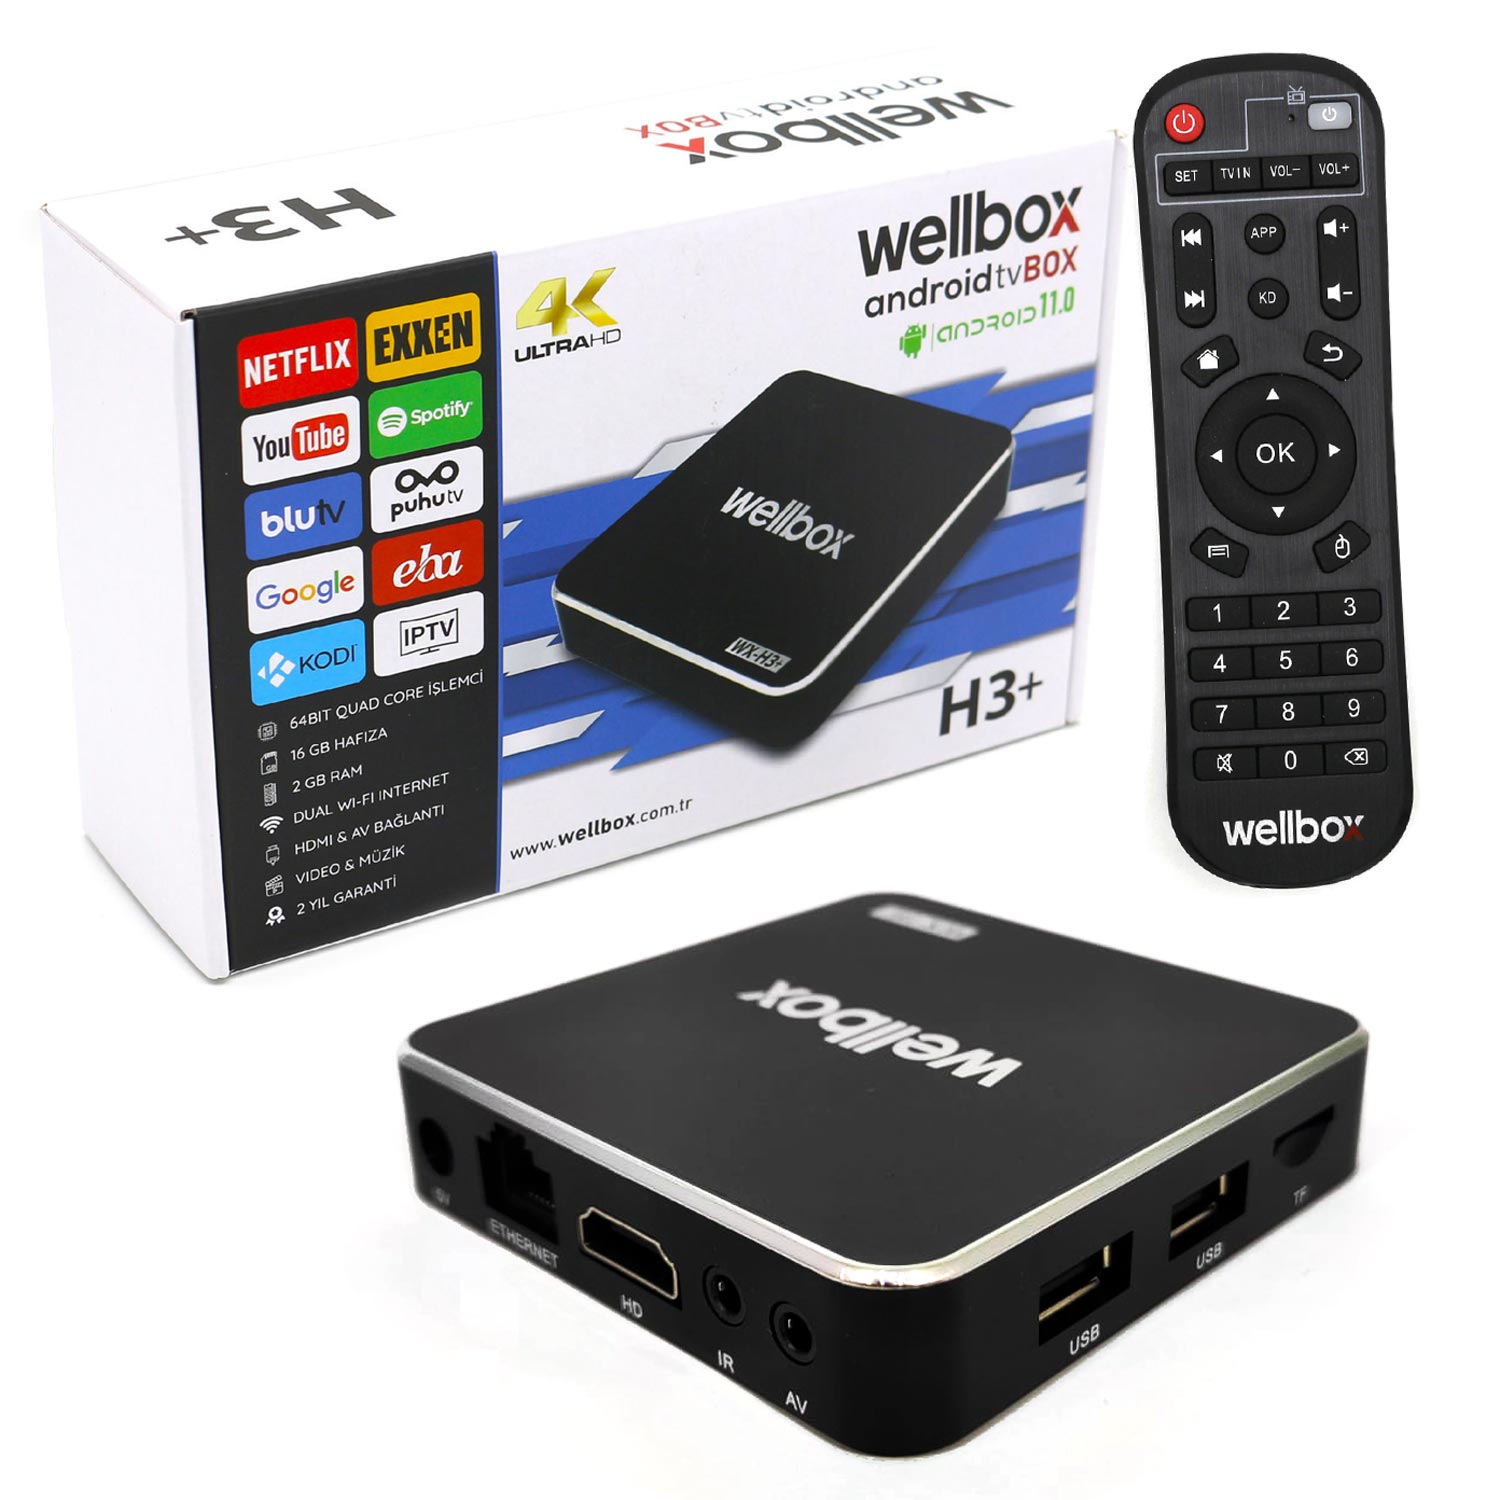 ANDROİD TV BOX 2GB RAM 16GB ROM WELLBOX WX-H3+